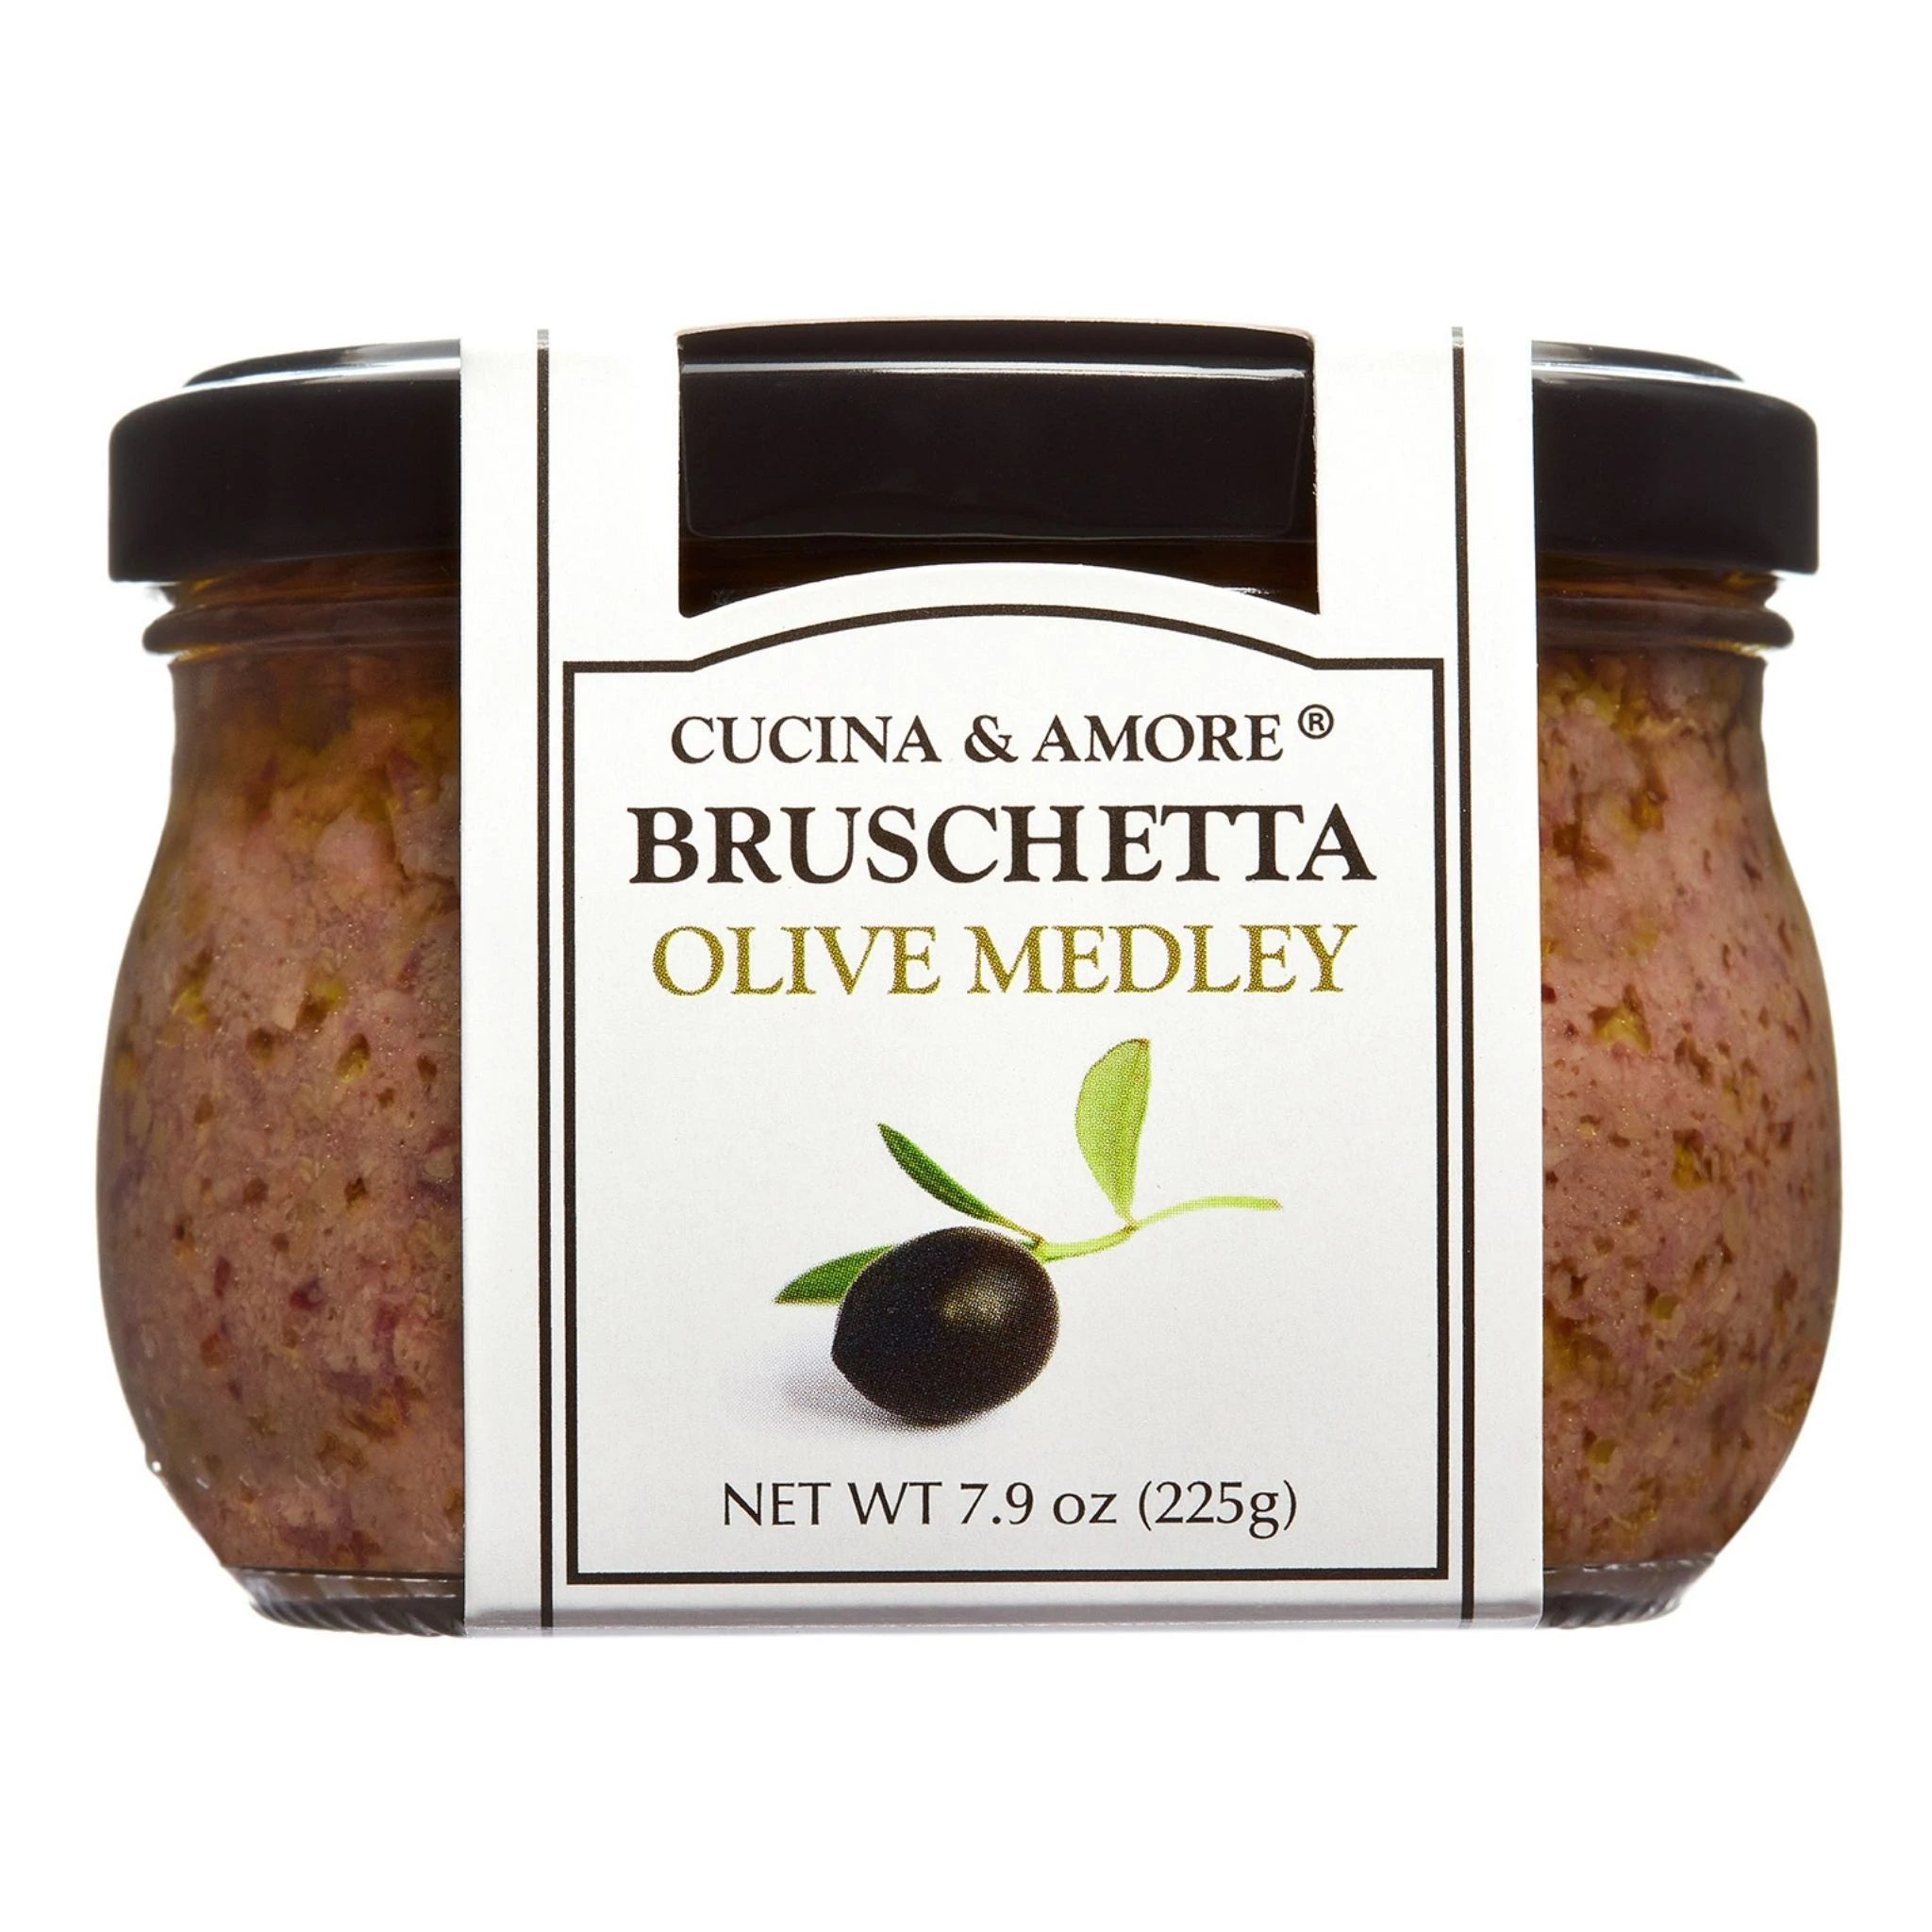 Cucina & Amore - Olive Medley Bruschetta